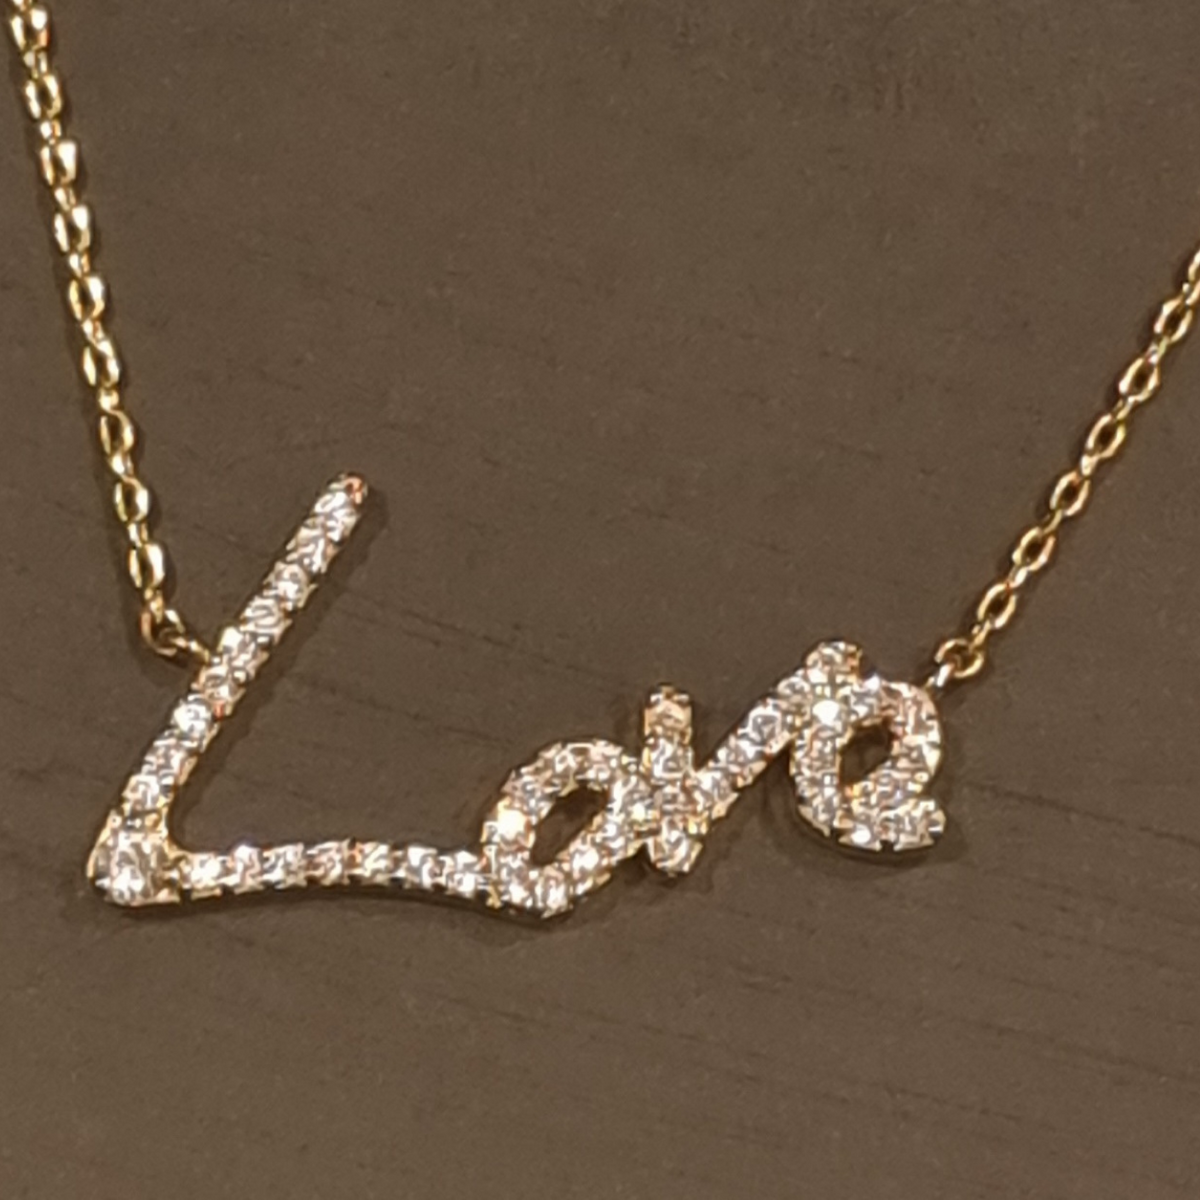 Trendy sparkling love pendant